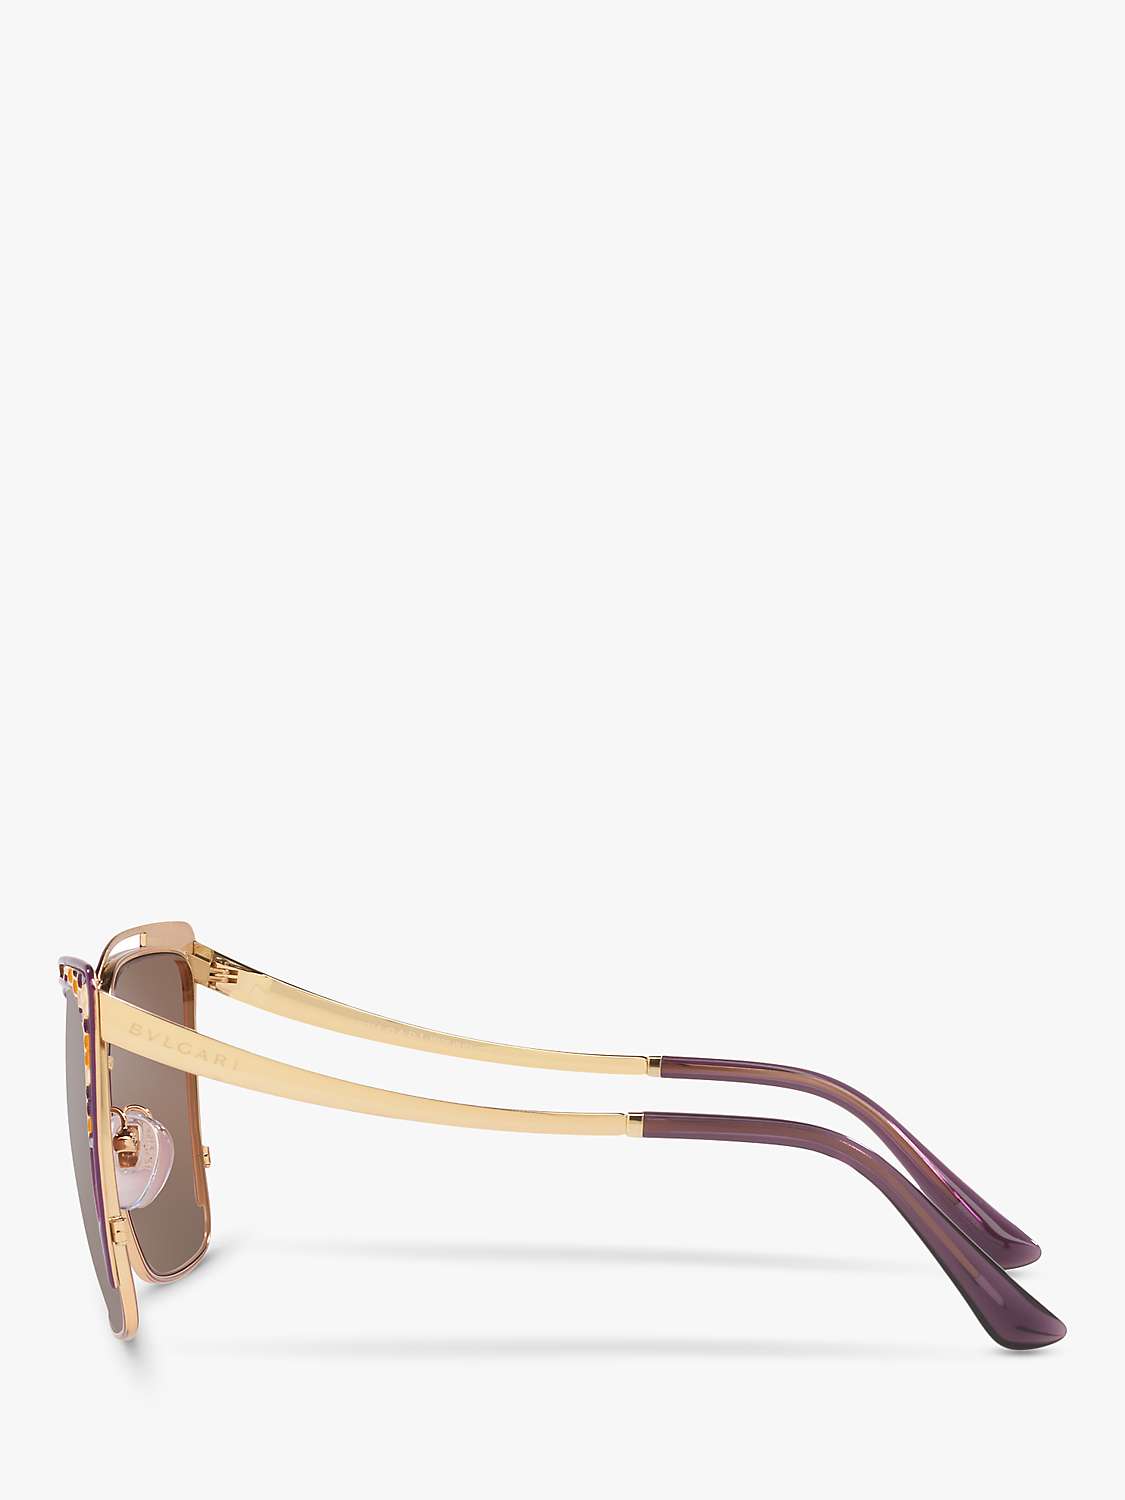 Buy BVLGARI BV6179 Women's Butterfly Sunglasses, Gold/Purple Gradient Online at johnlewis.com